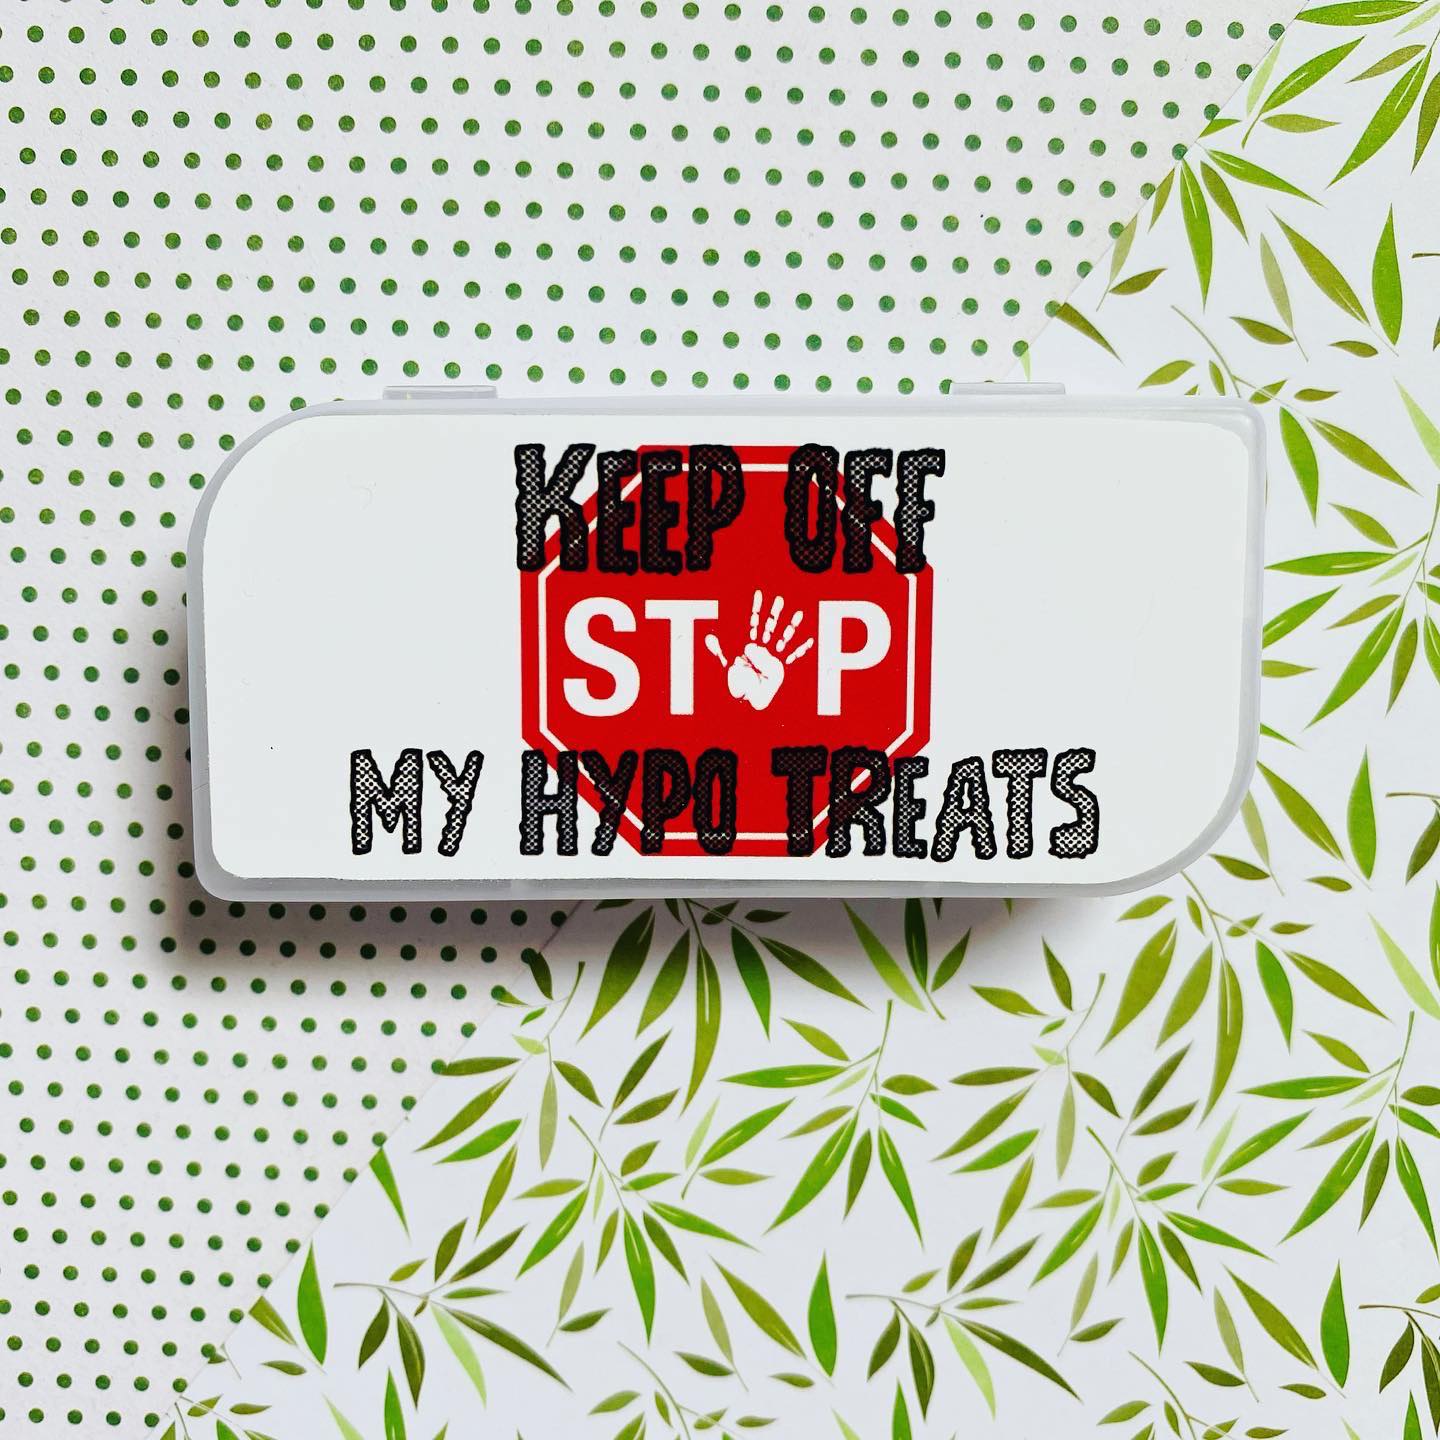 Hypo Pot - Stop - Keep Off My Hypo Treats